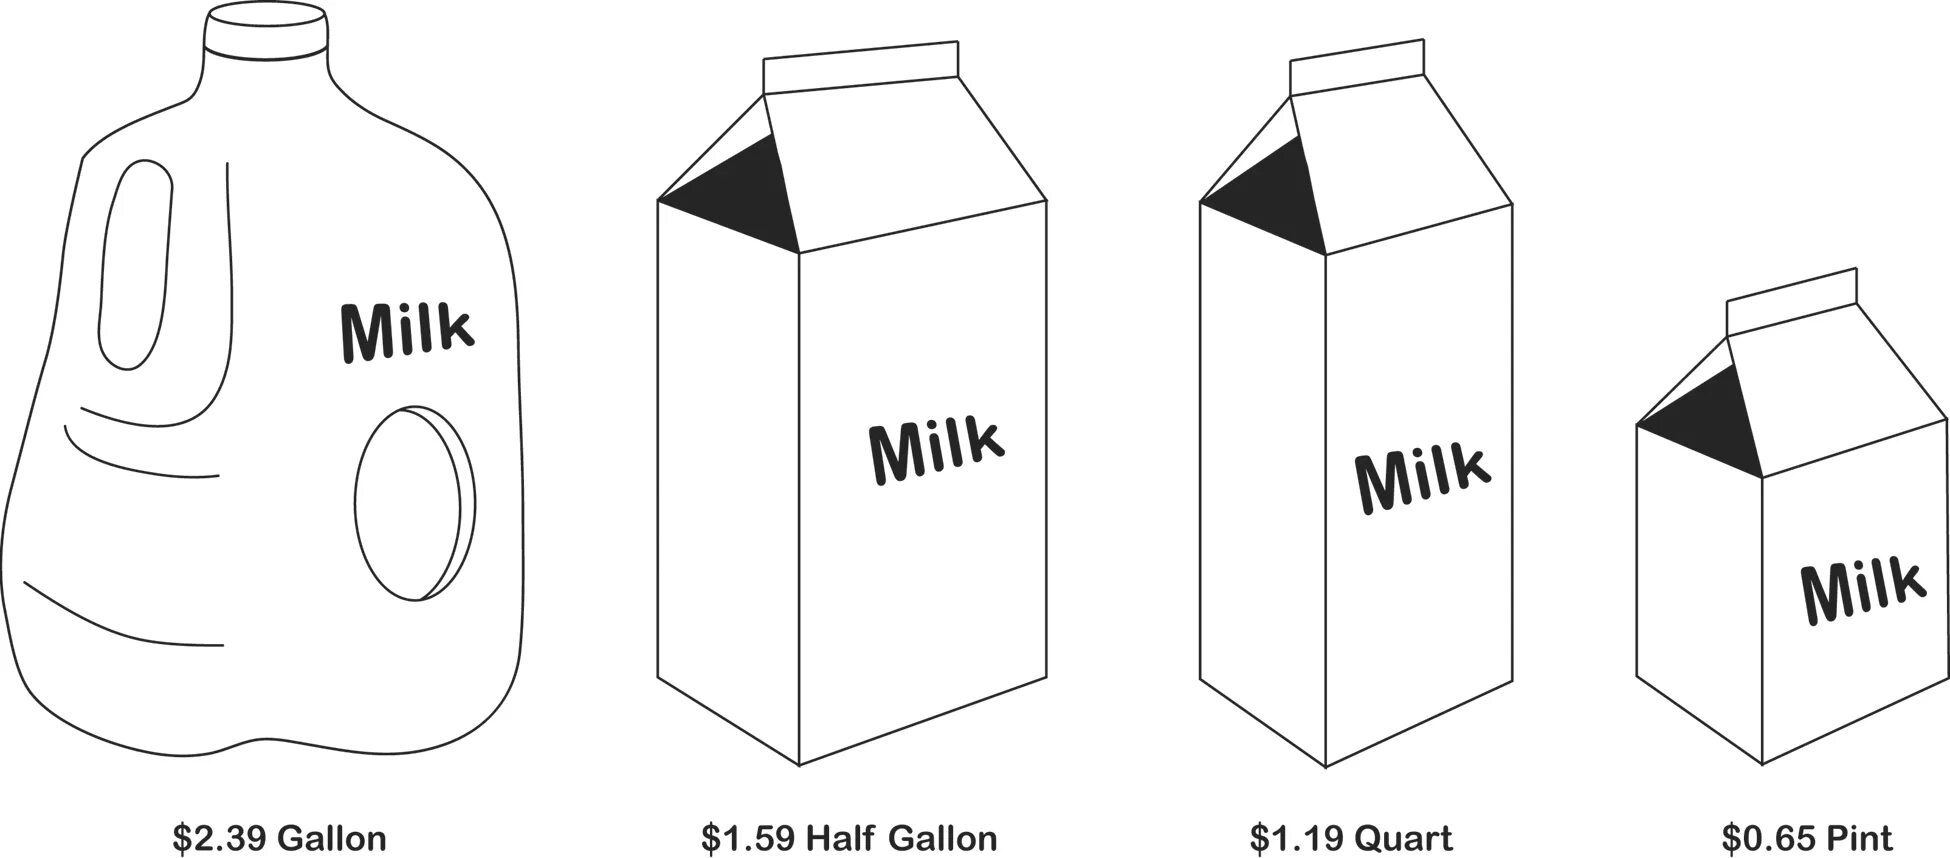 Галлон. Галлон молока. Галлон в литры. Галлон молока в литрах.